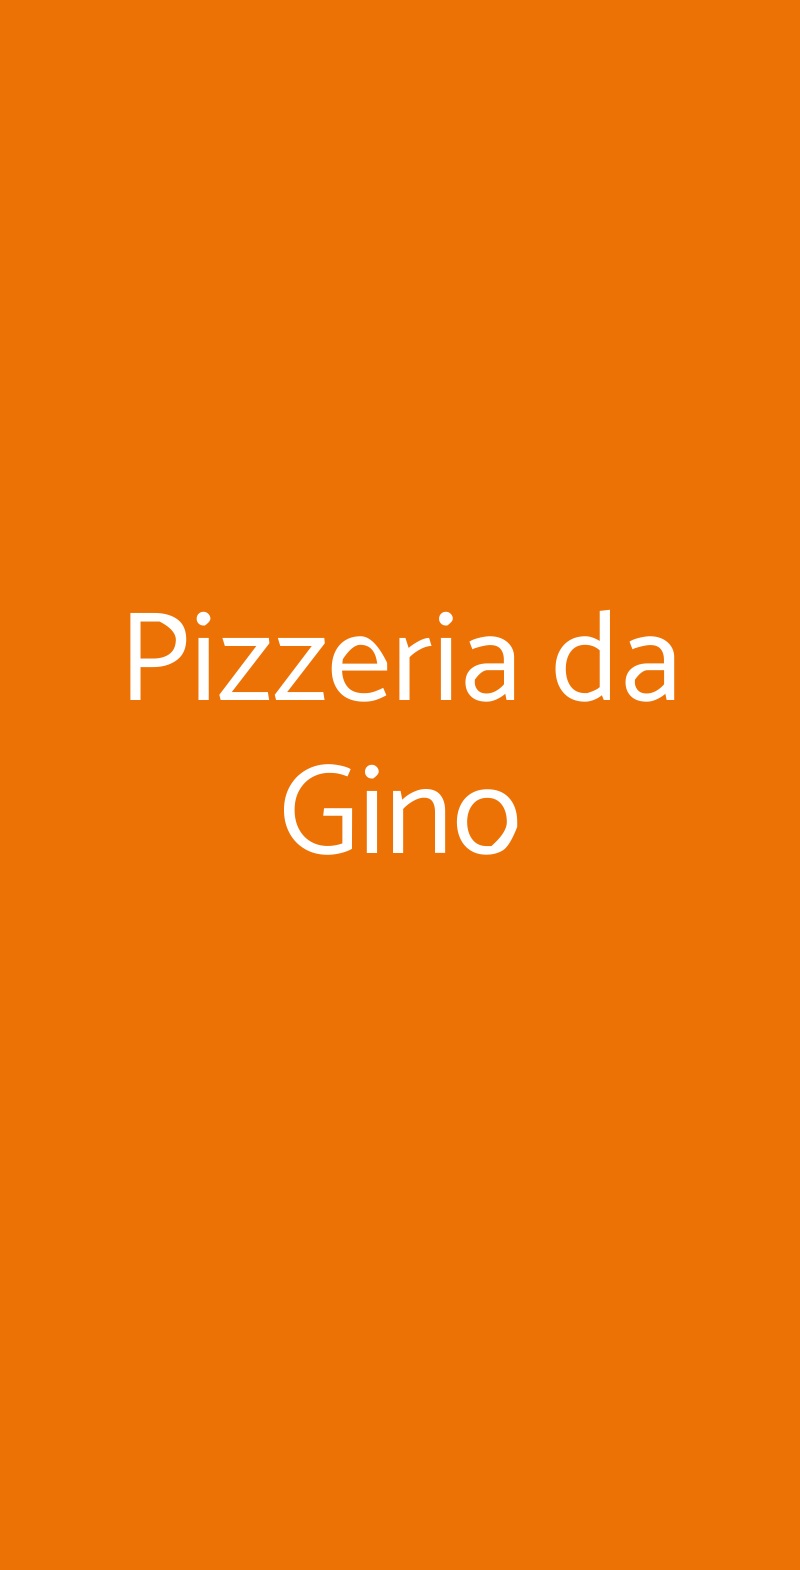 Pizzeria da Gino Milano menù 1 pagina